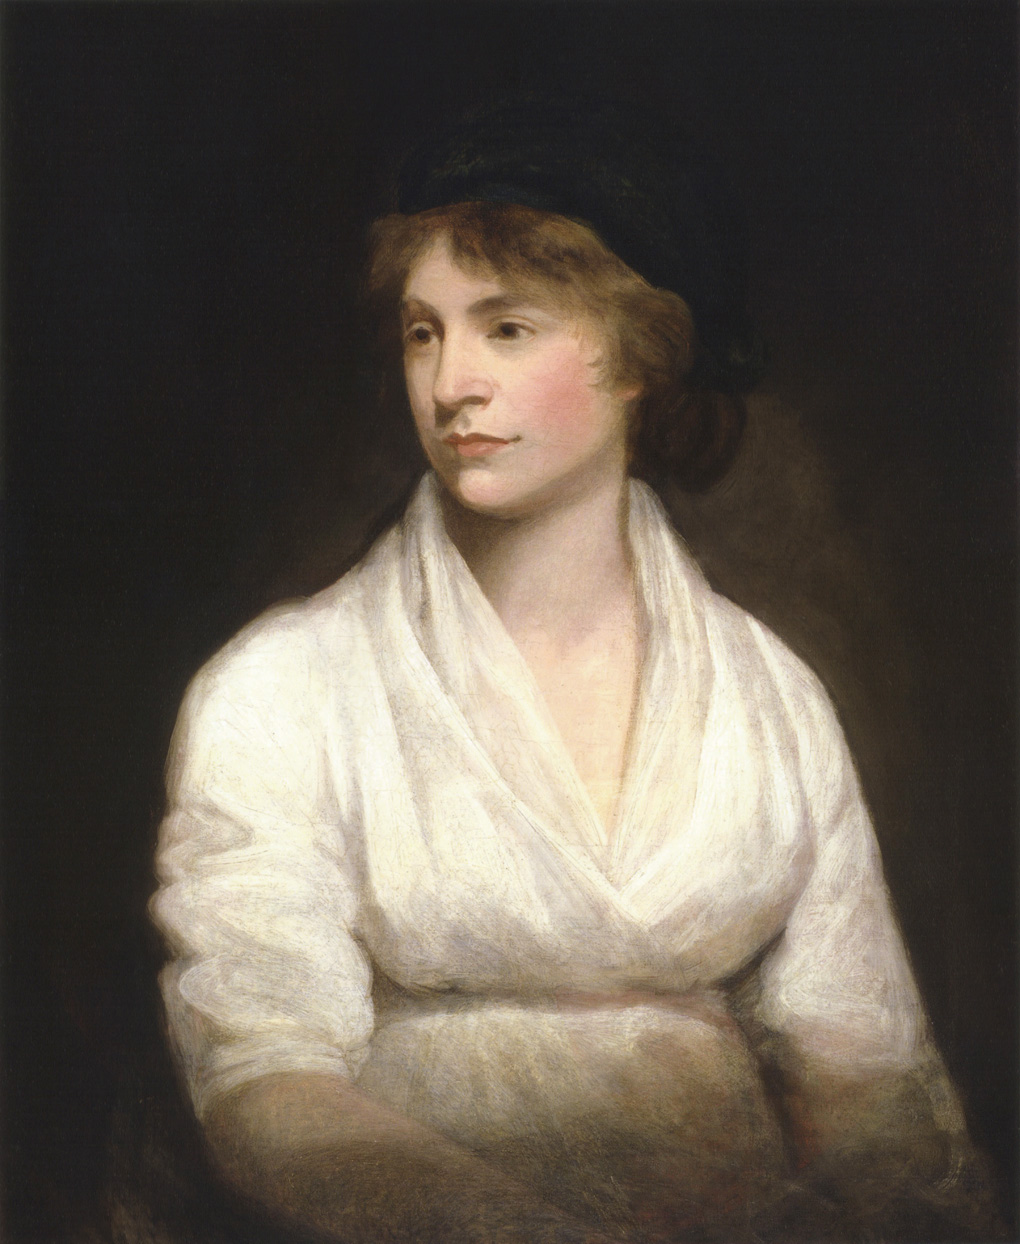 Mary_Wollstonecraft_by_John_Opie_(c._1797).jpg  by Acef Ebrahimi